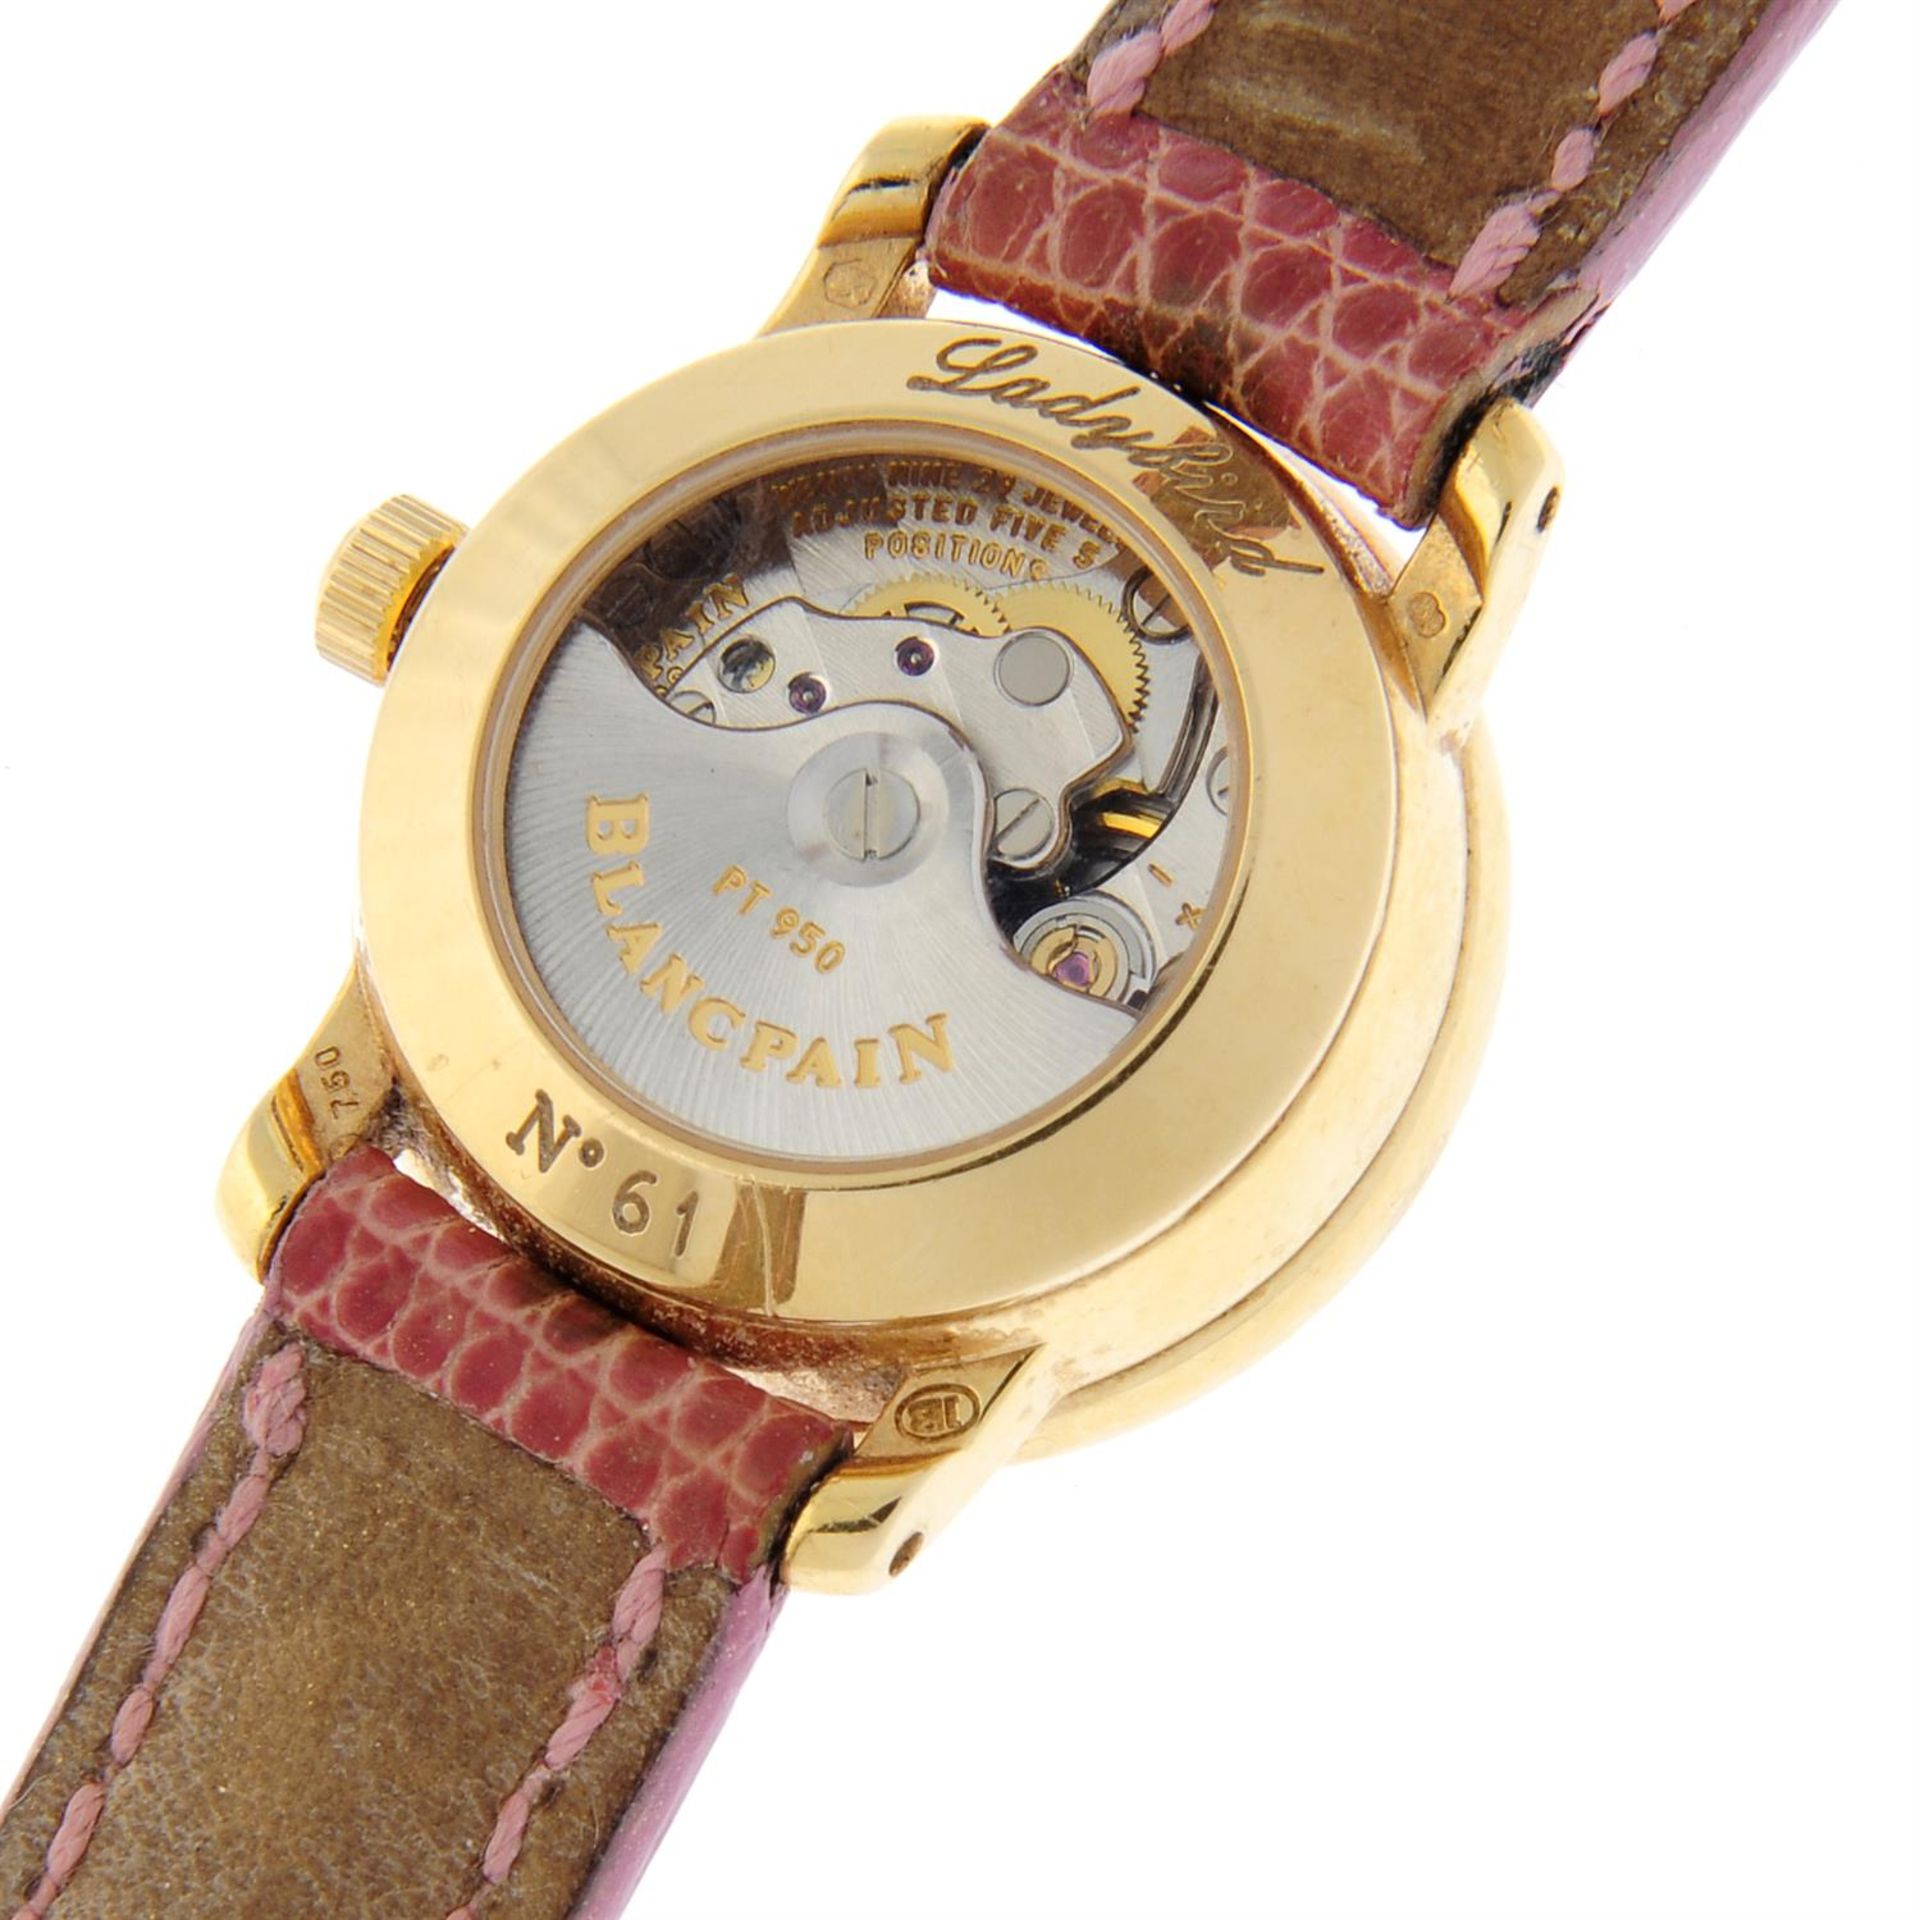 BLANCPAIN - an 18ct yellow gold Ladybird wrist watch, 21.5mm. - Image 4 of 6